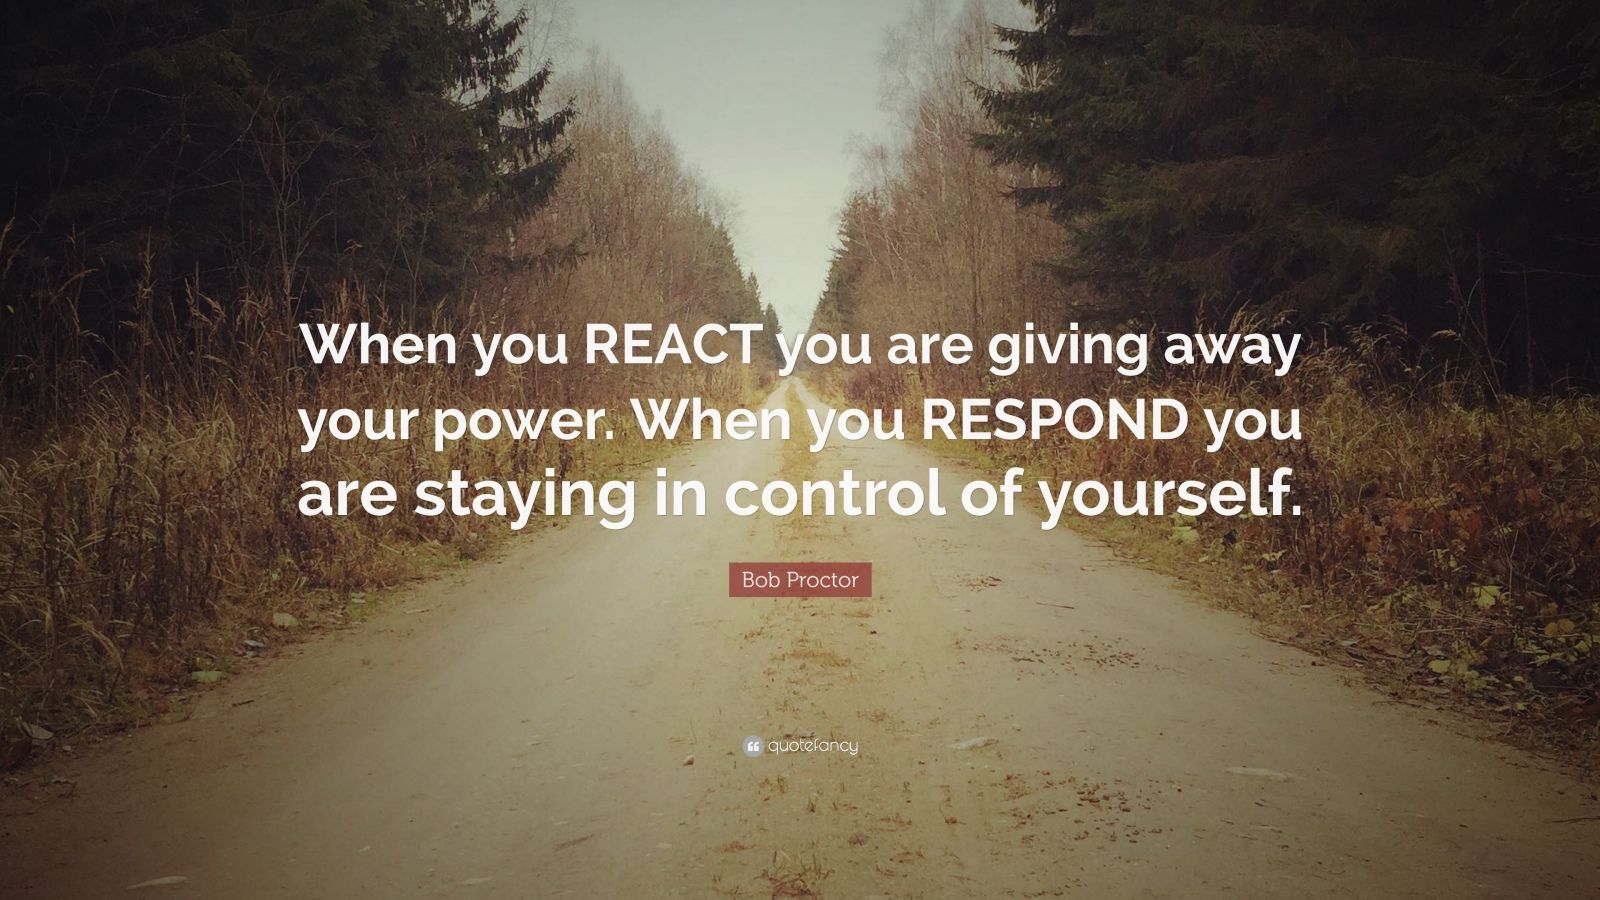 When you react, you're giving away your power.